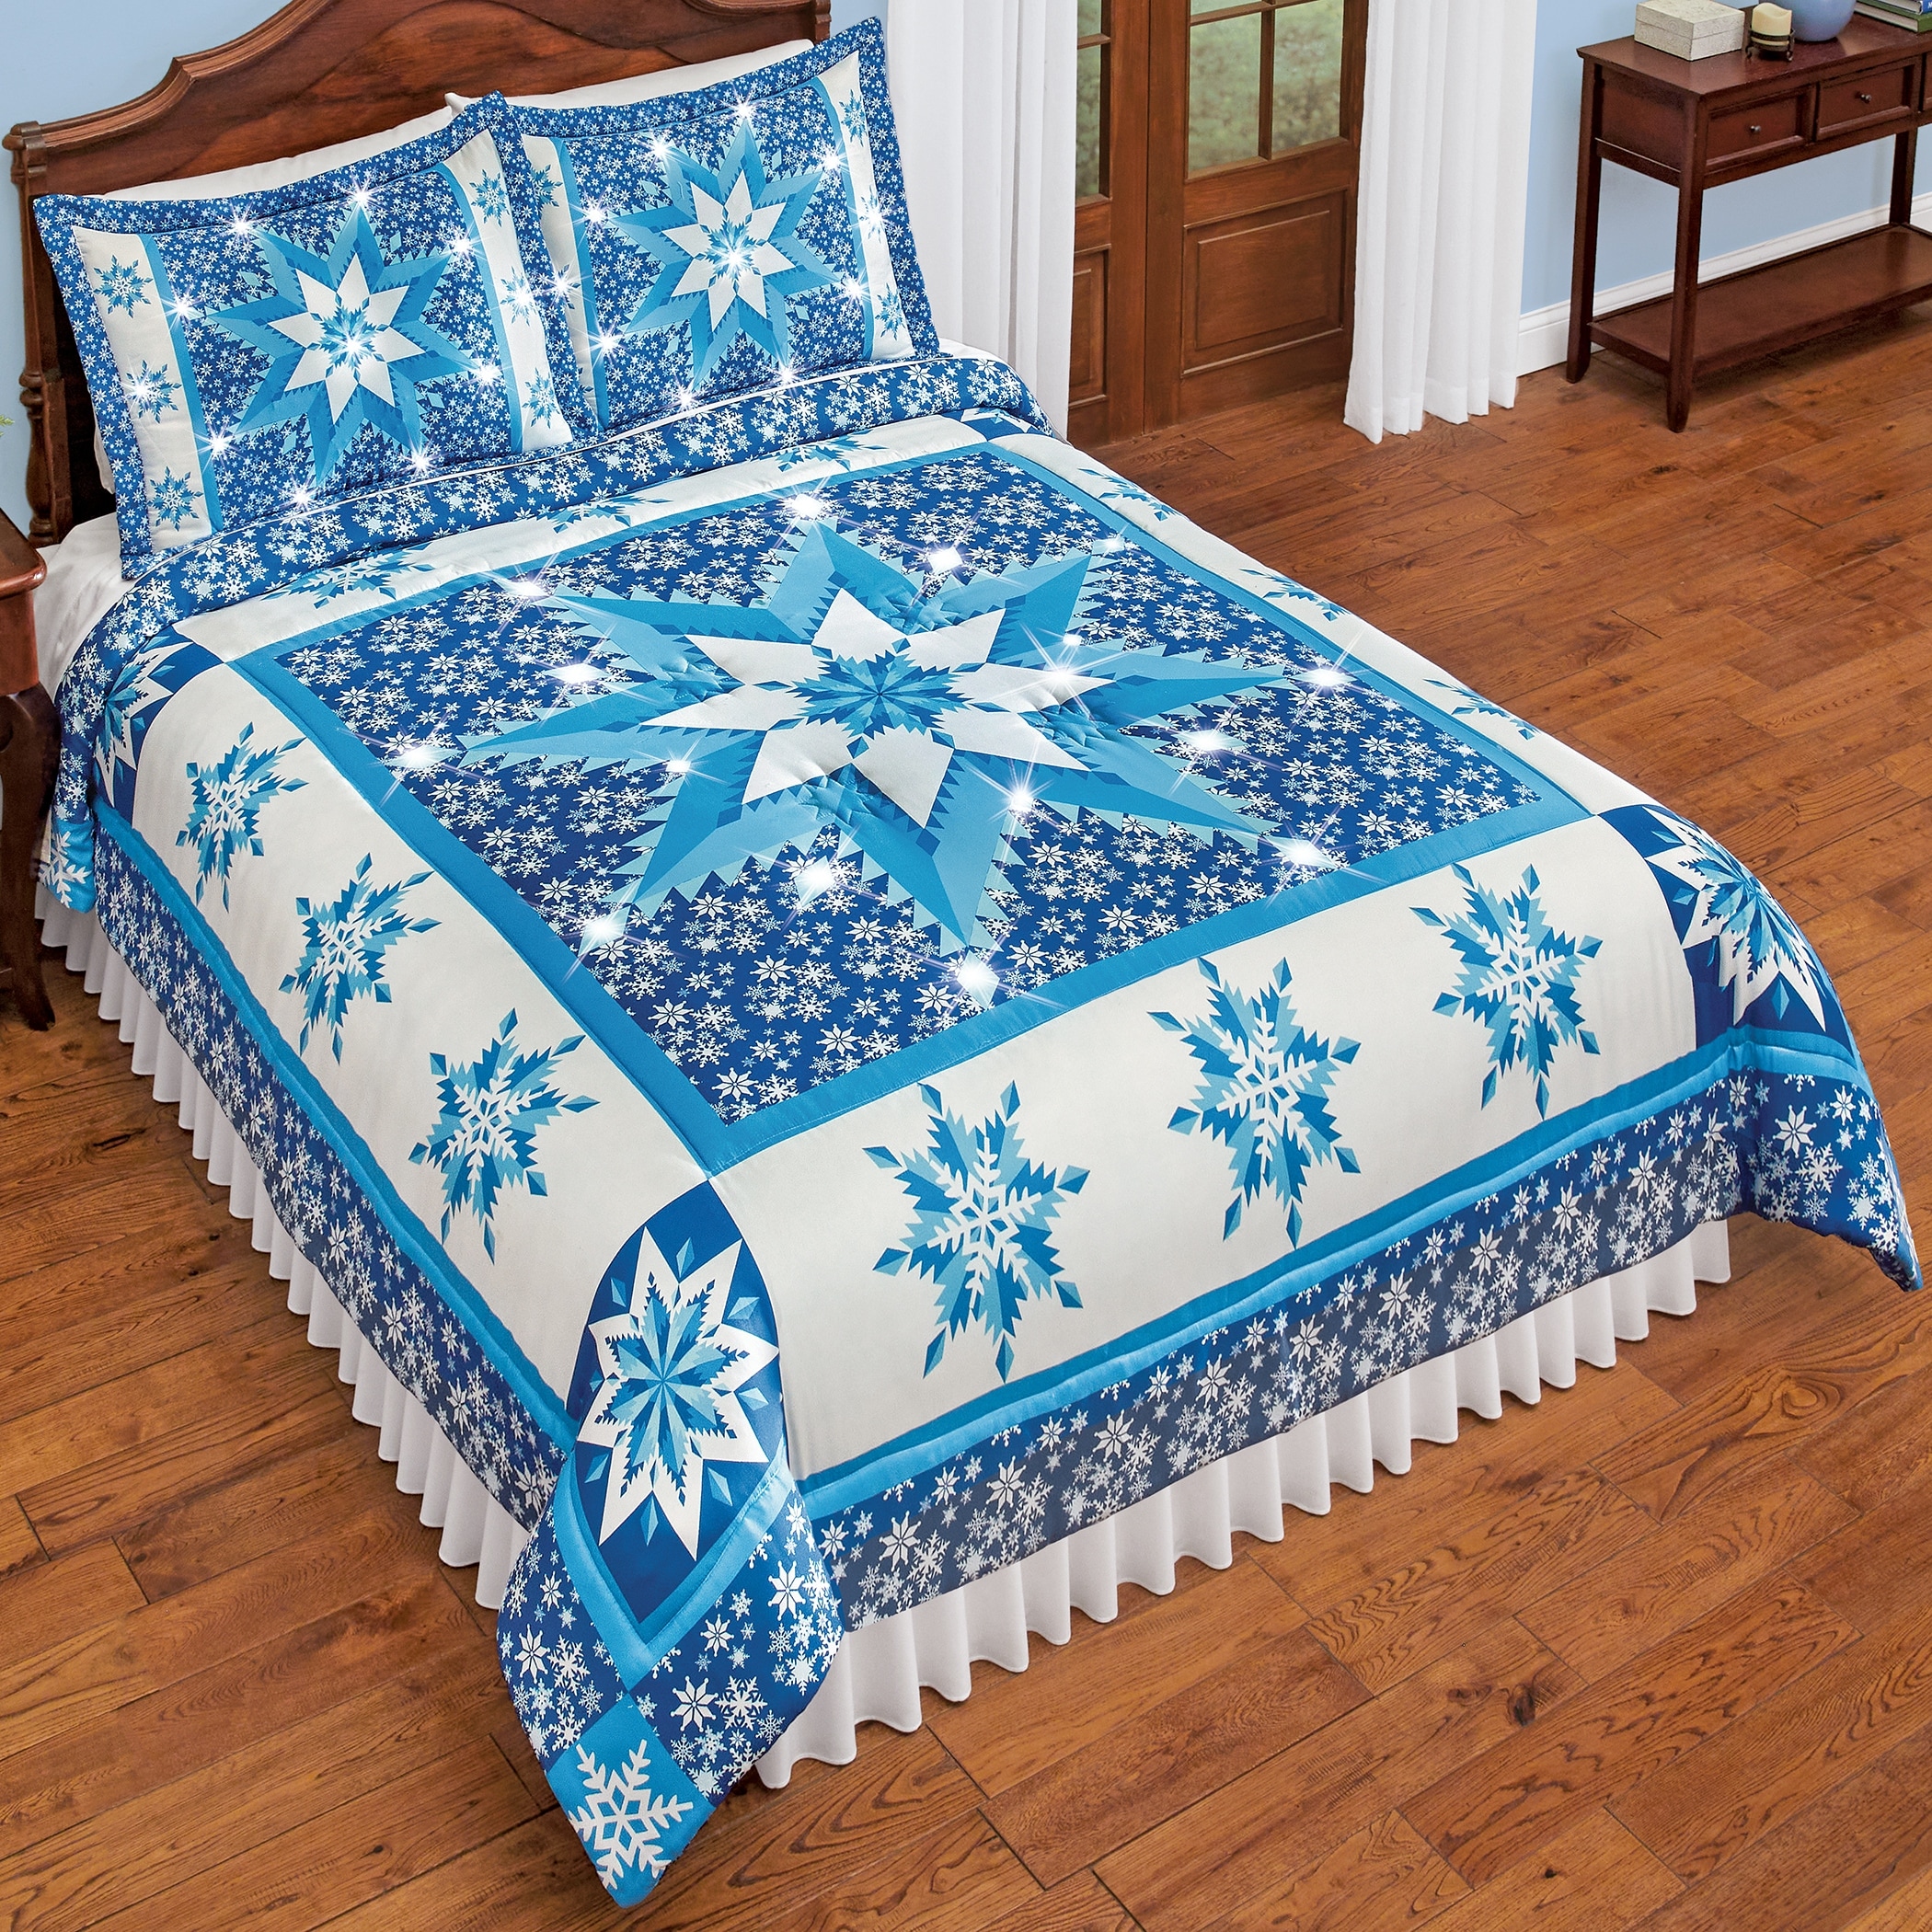 Holiday Snowflake Comforter with LED Lights